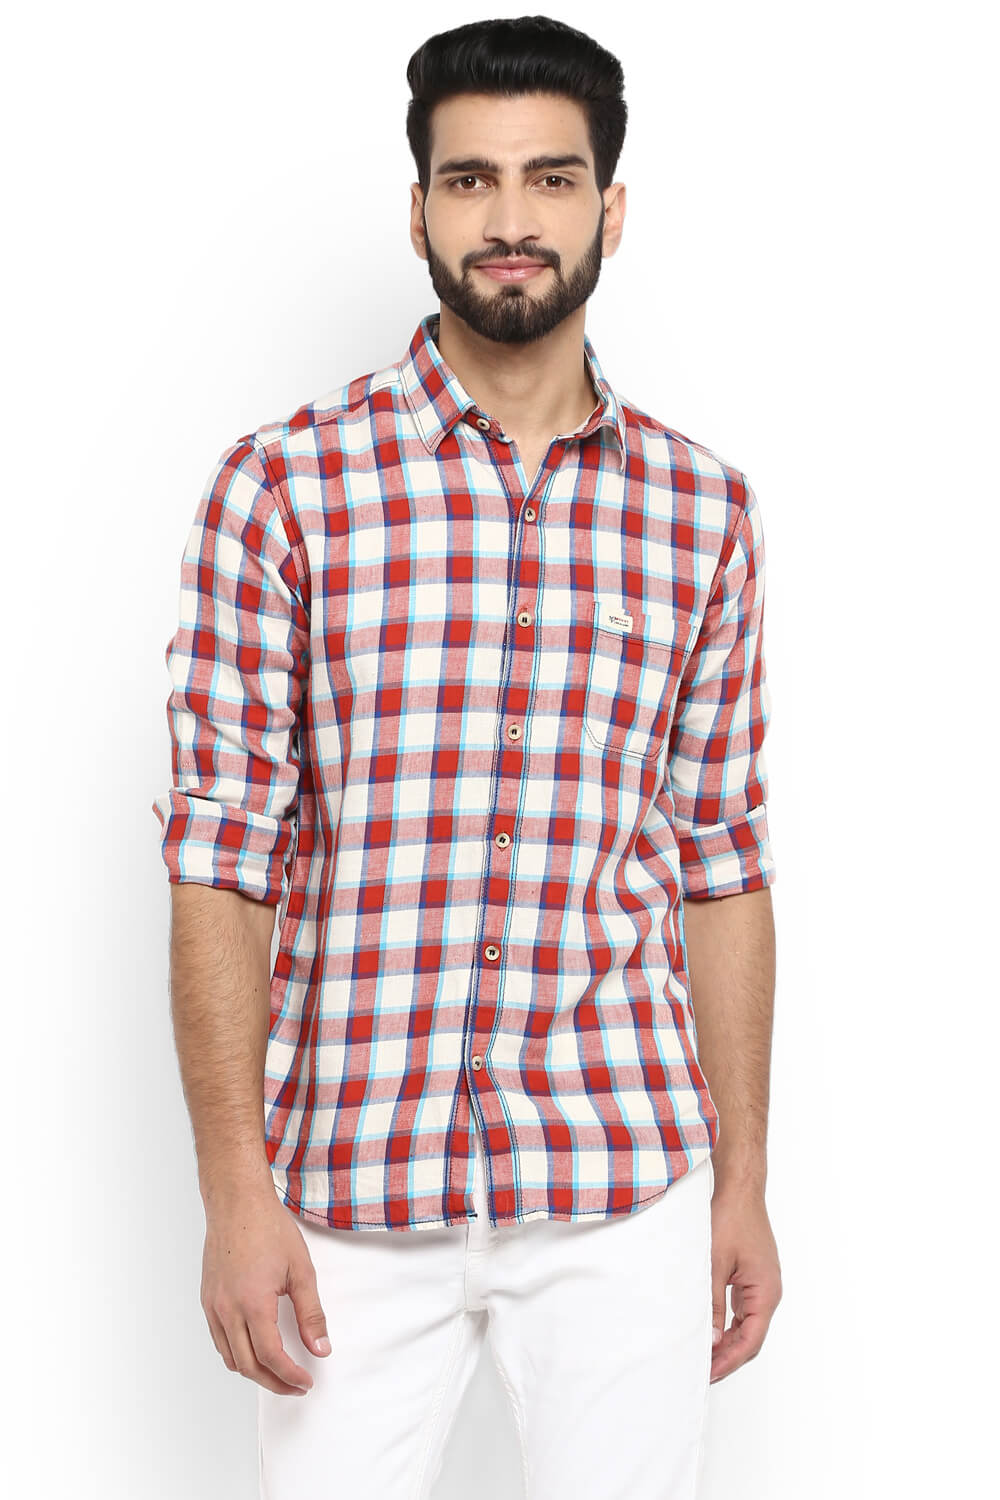 Men's Linen Shirts: Elegant Wardrobe-Essentials for Any Season